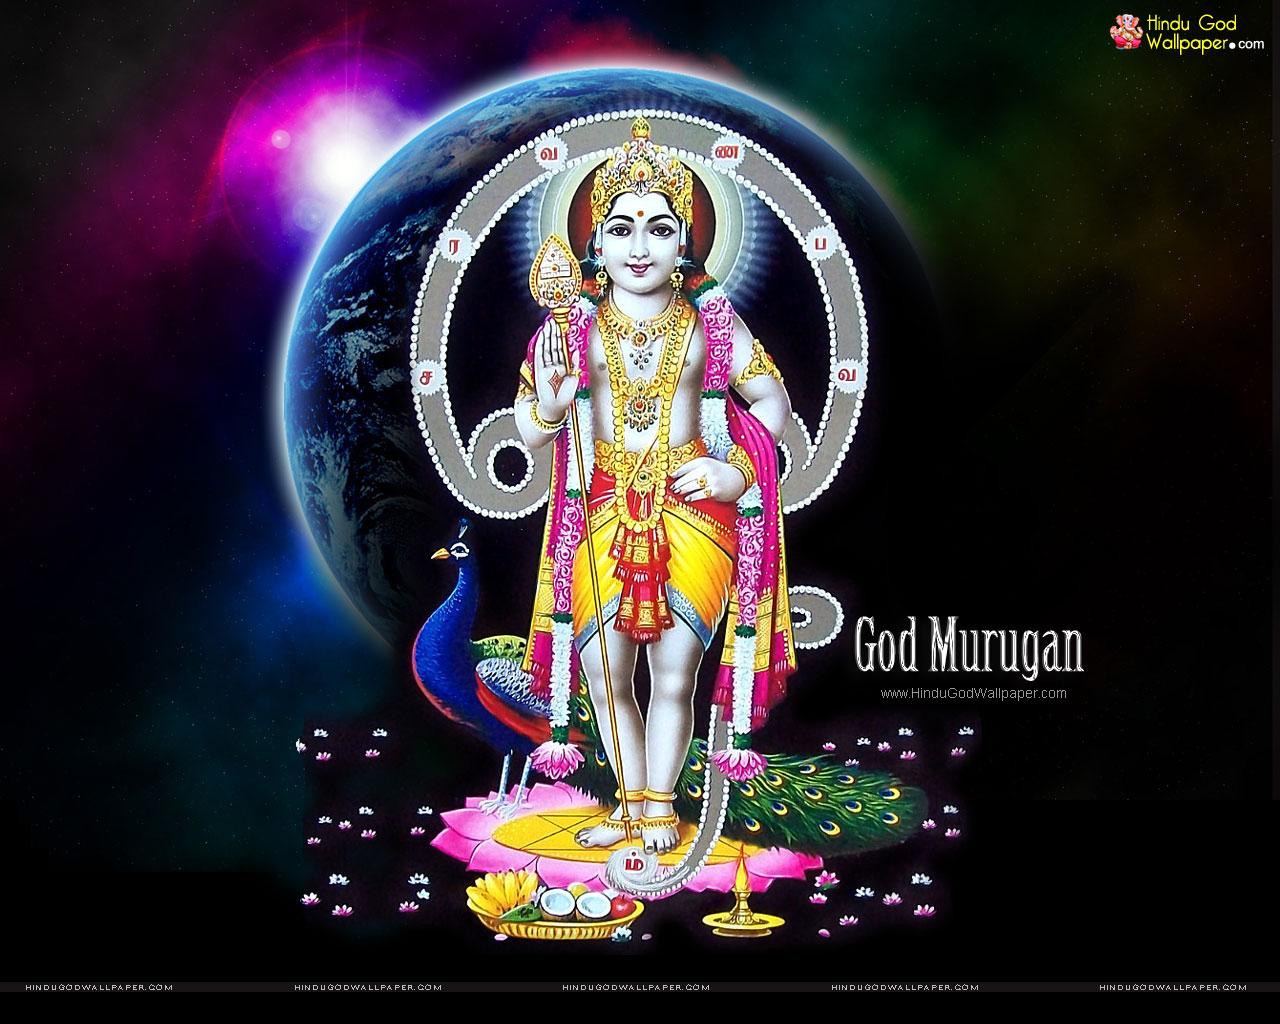 Lord Murugan Wallpapers - Top Free Lord Murugan Backgrounds ...